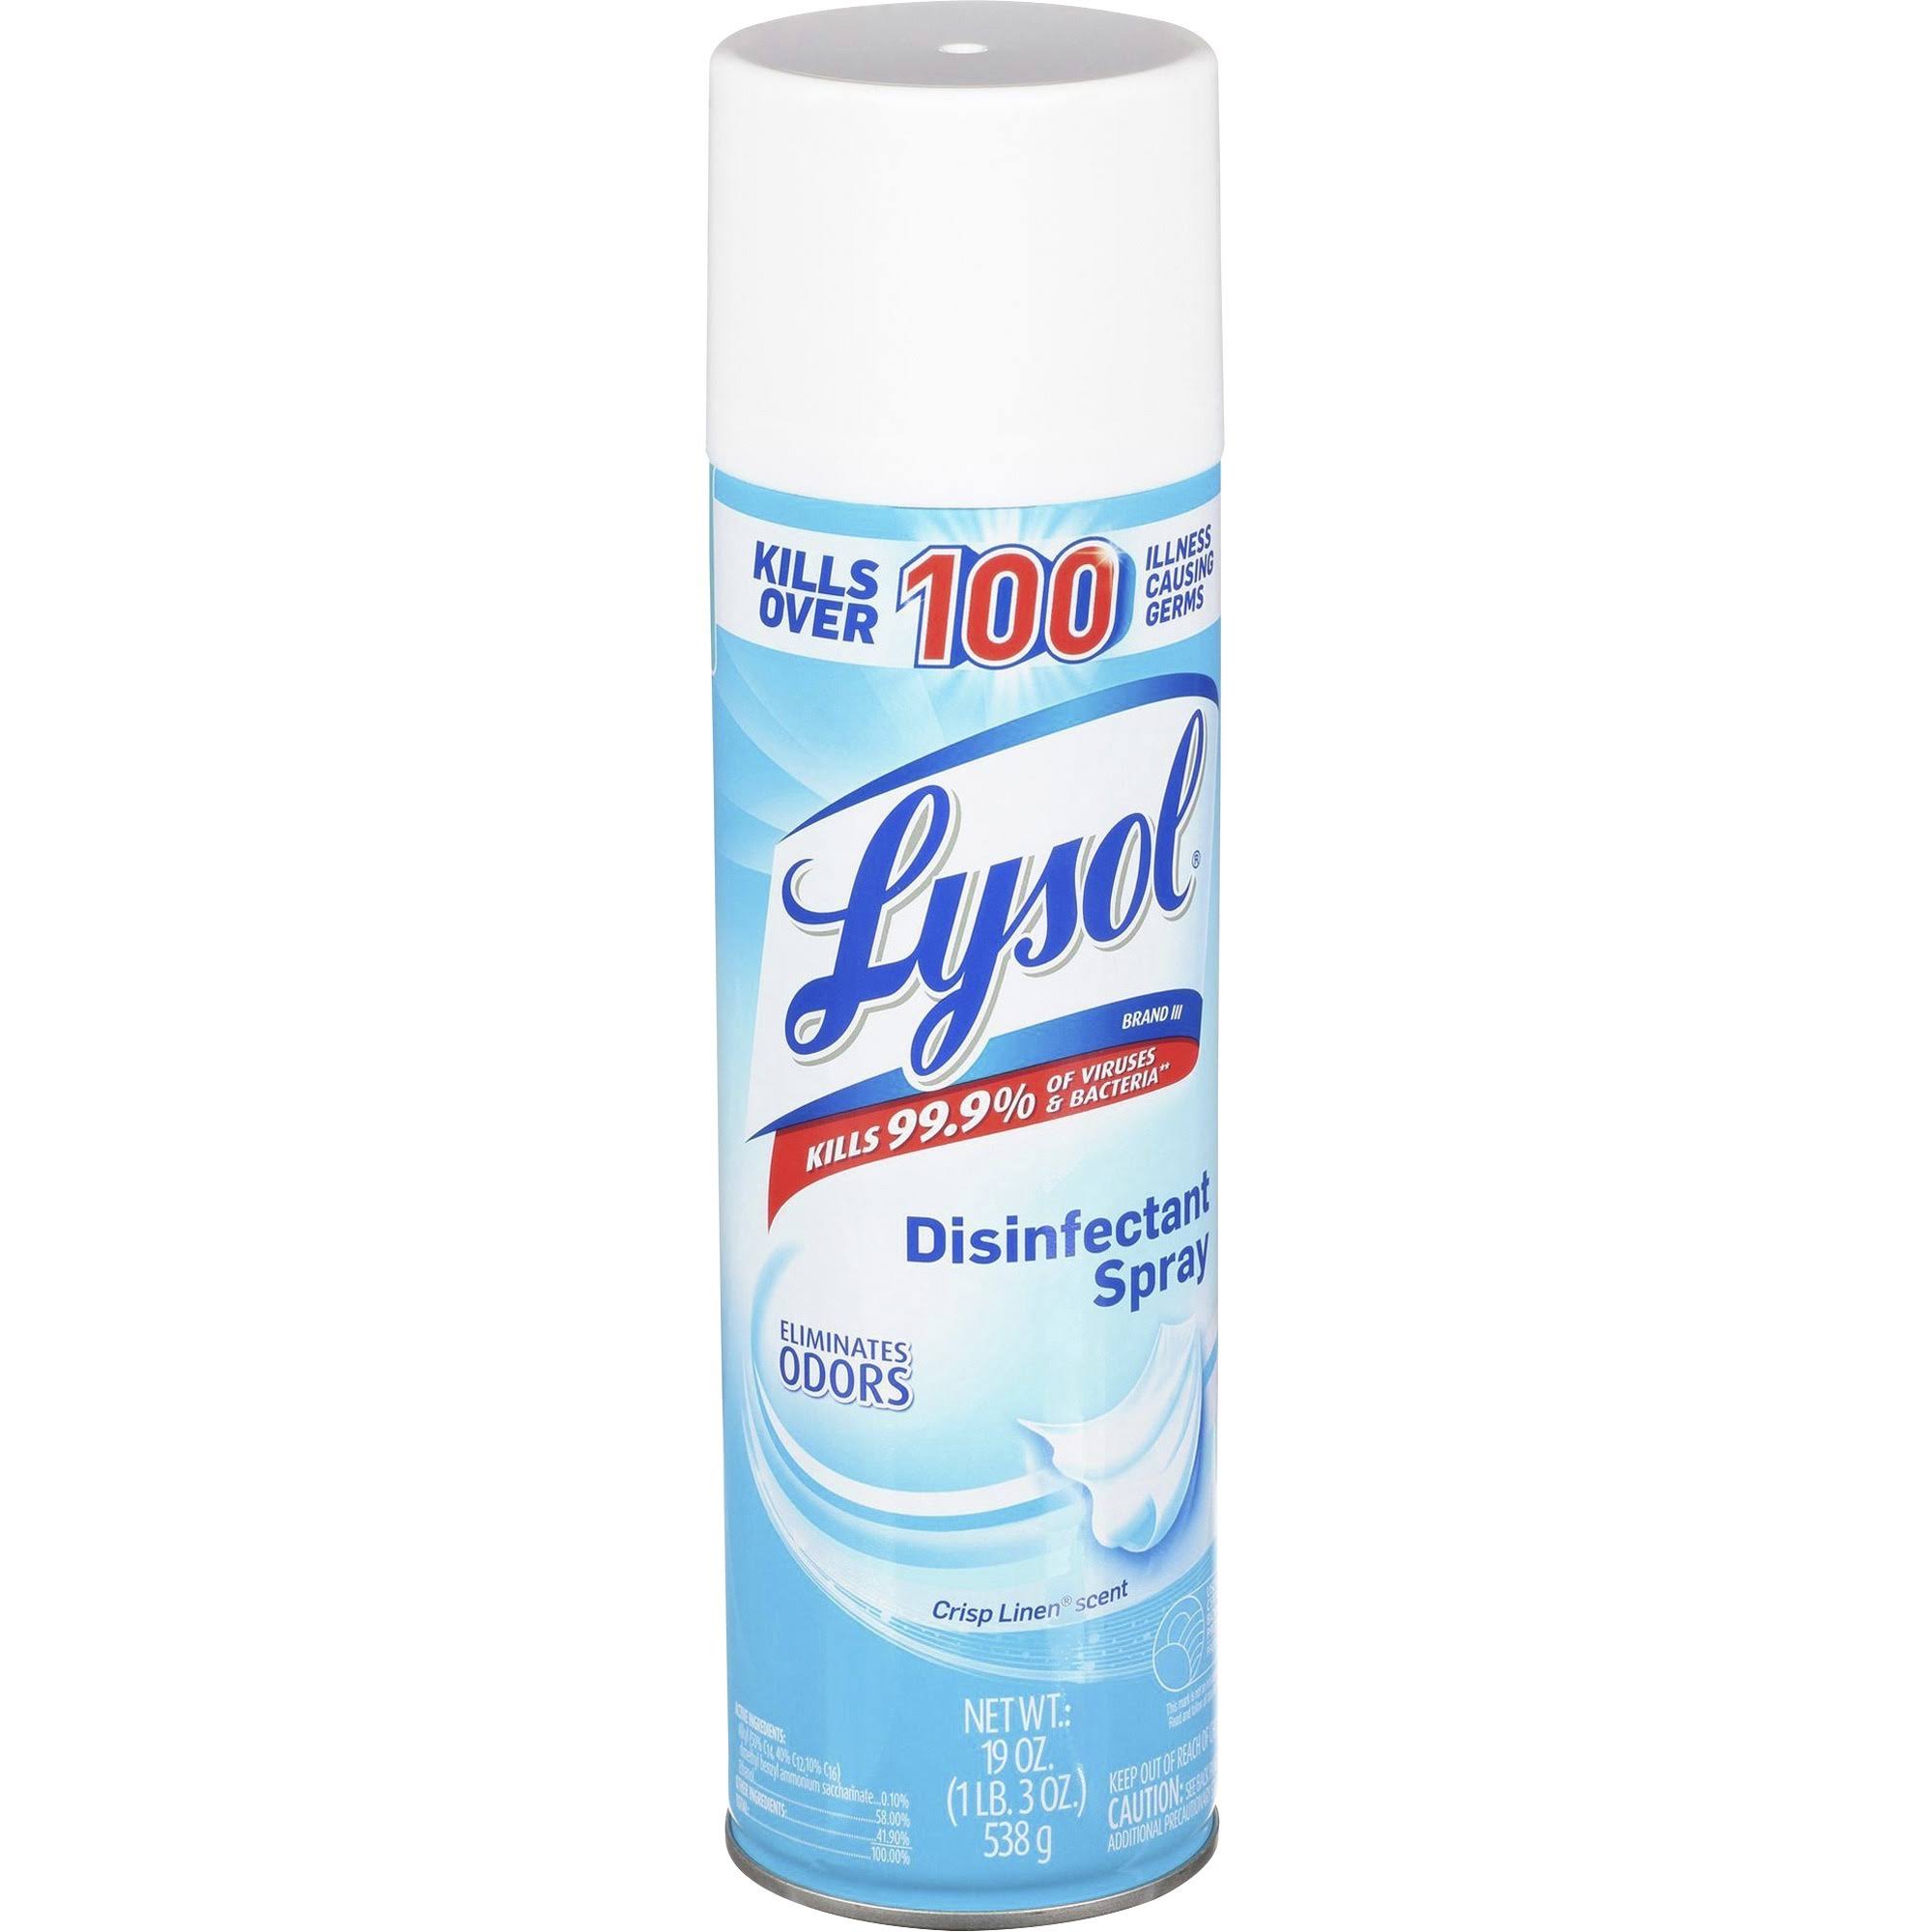 Lysol Disinfectant Spray - Crisp Linen, 538g